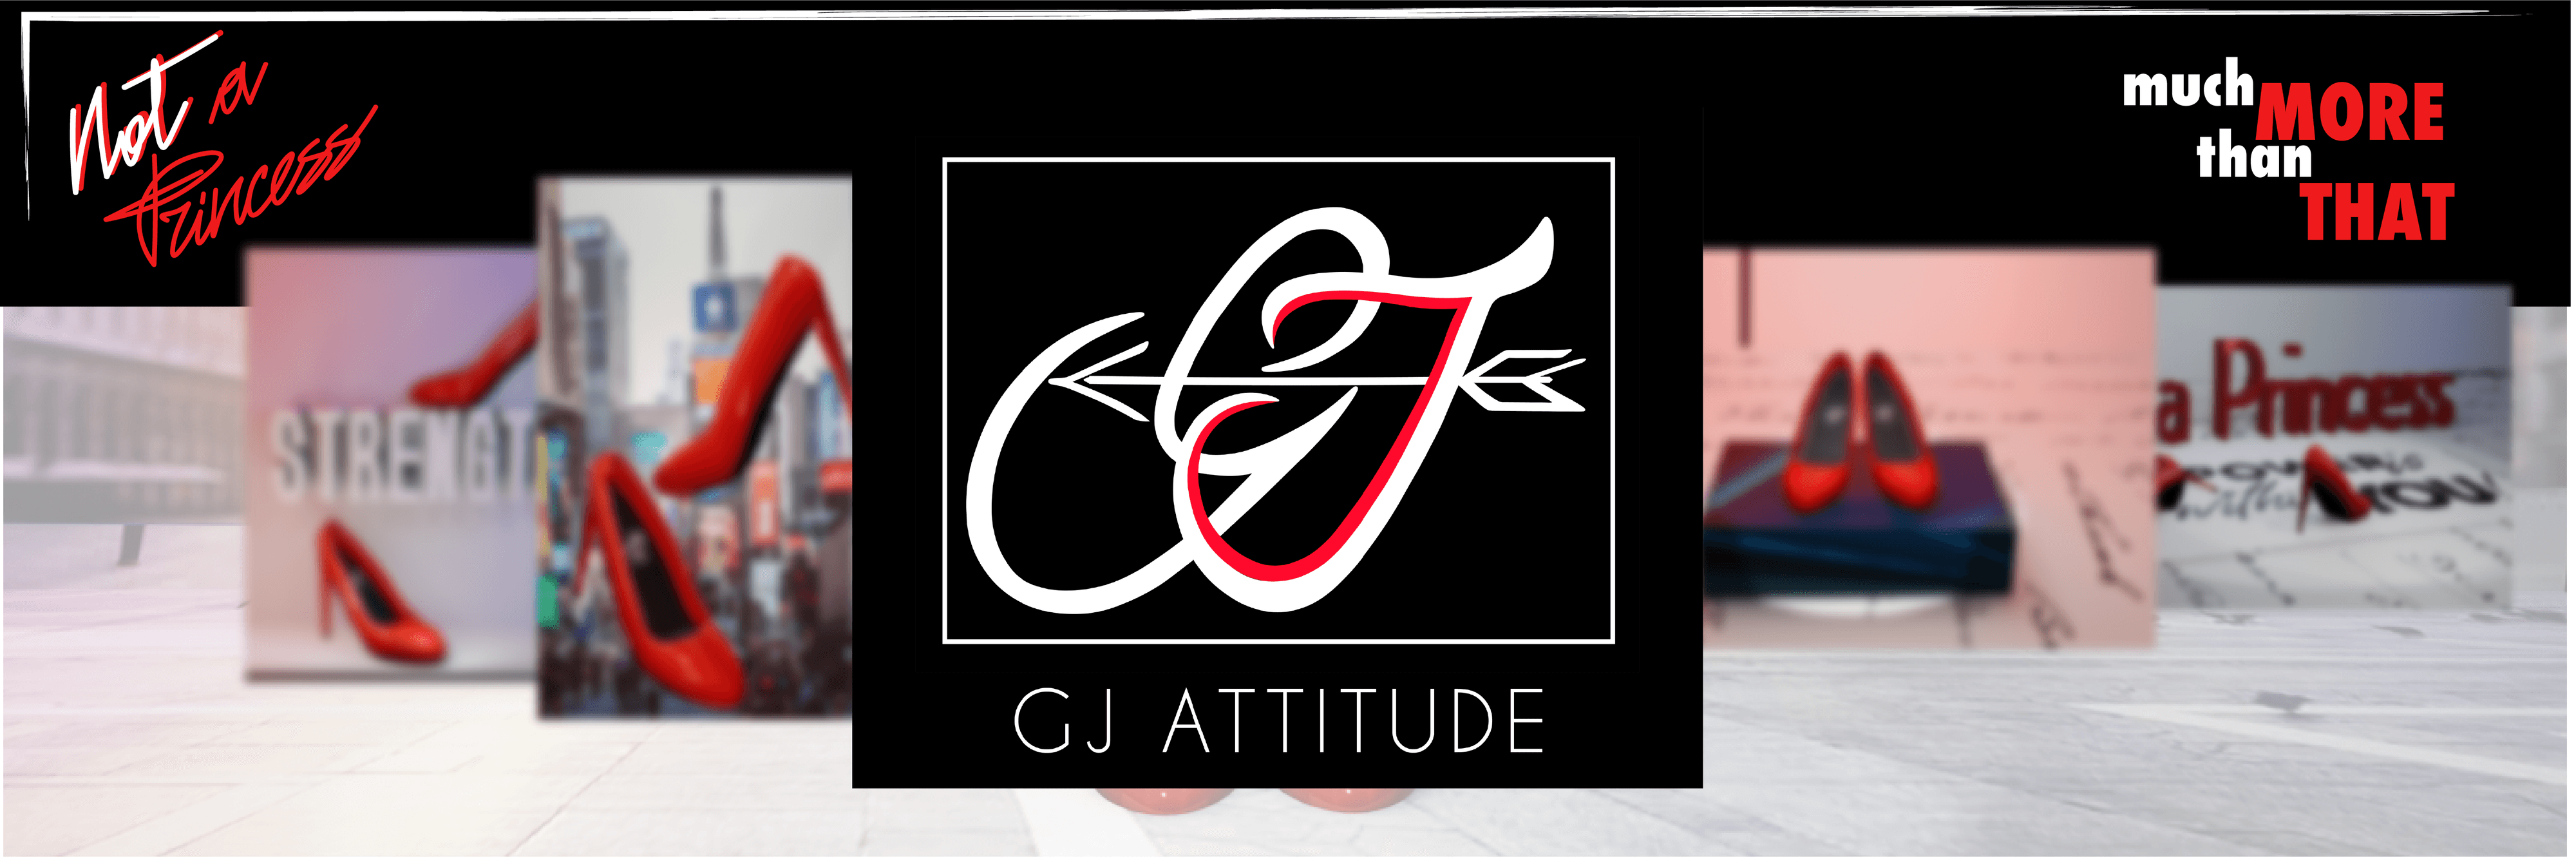 Gj_Attitude バナー